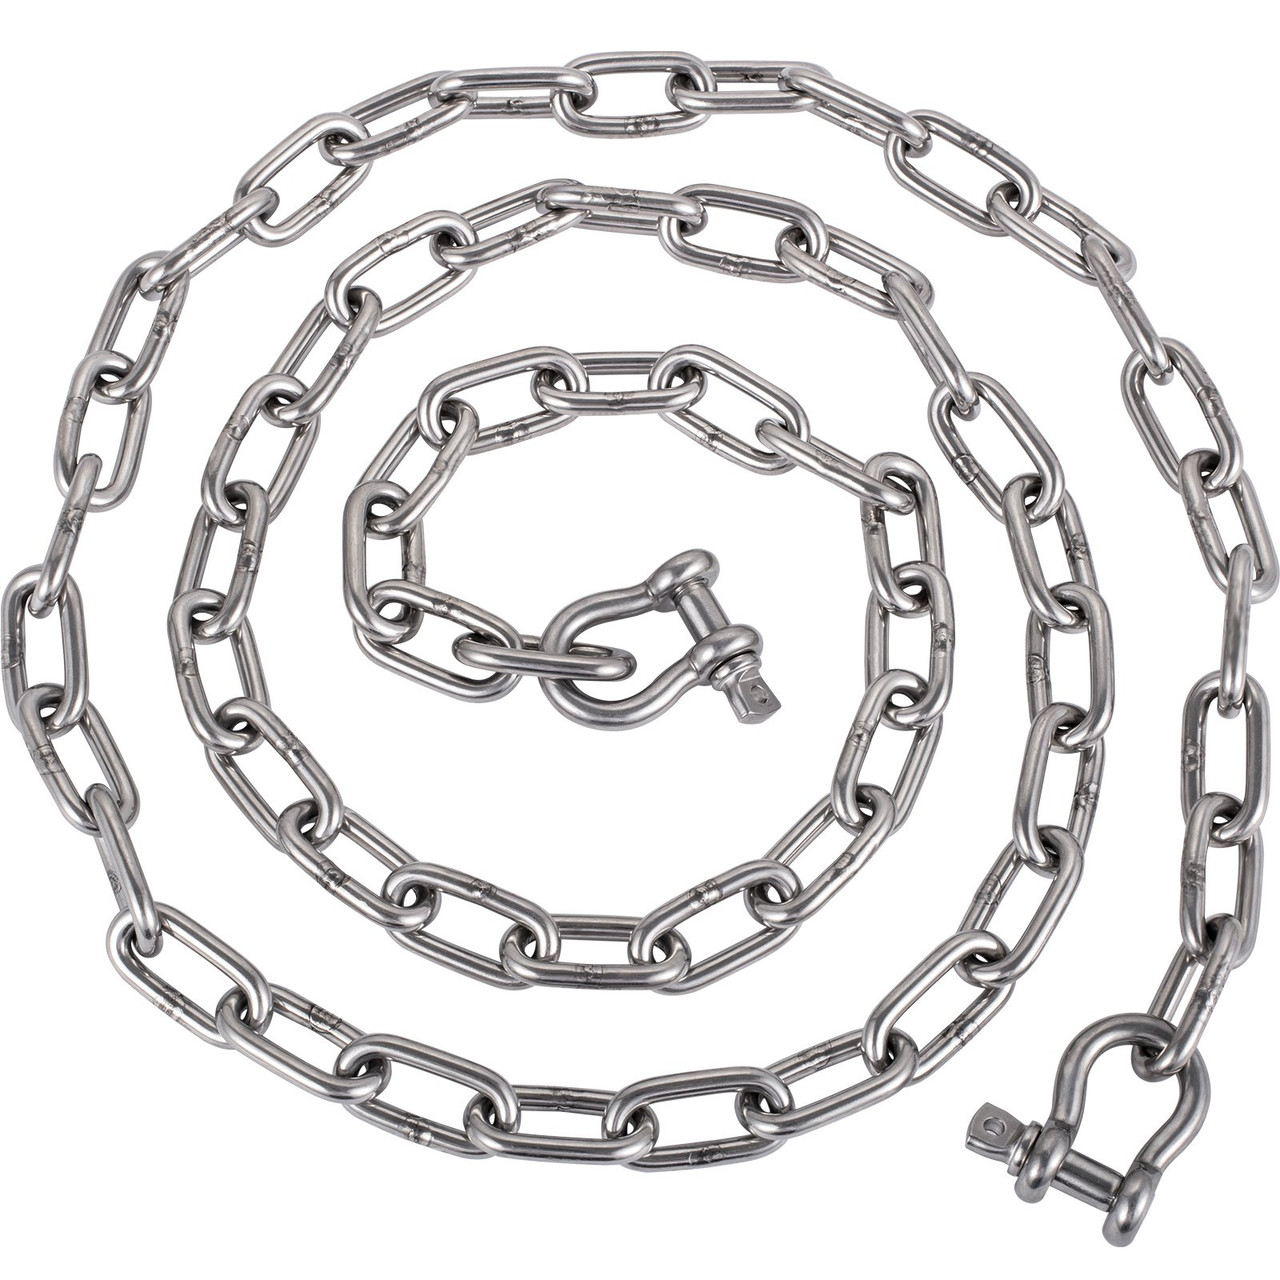 Anchor Chain, 20' x 5/16 316 Stainless Steel Chain, 3/8 Anchor Chain  Shackle, 7120lbs